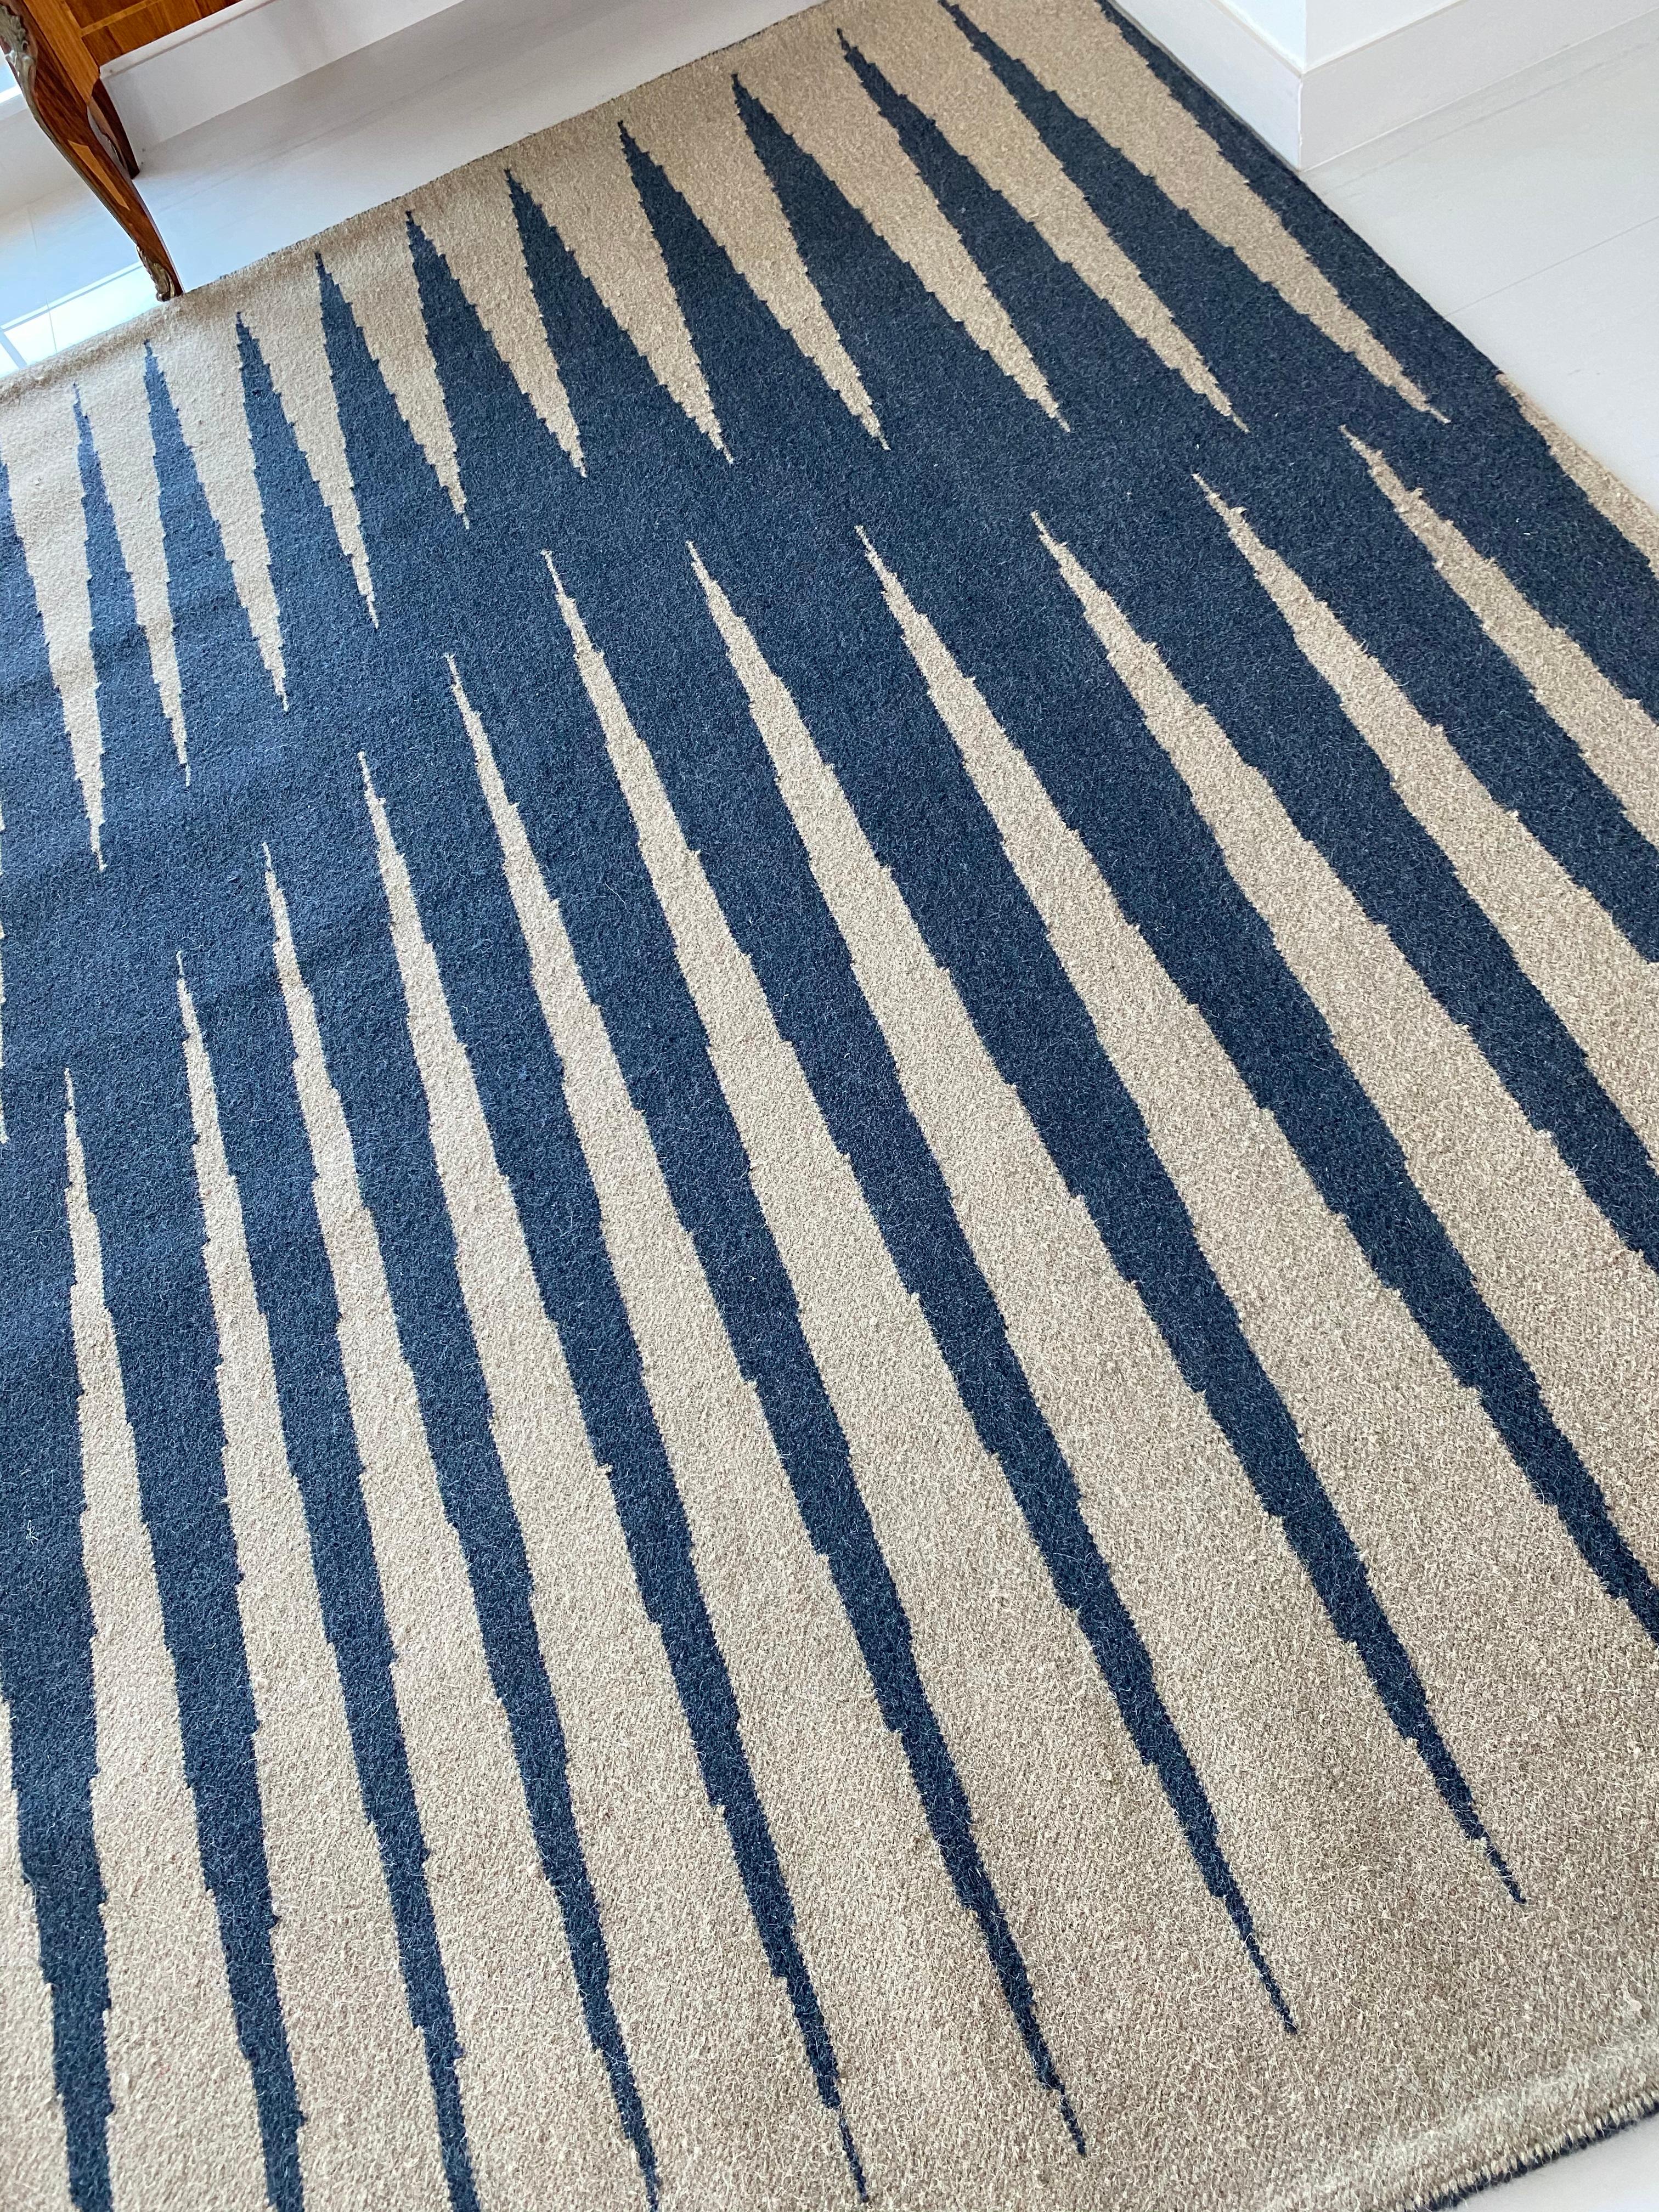 blue grey carpets